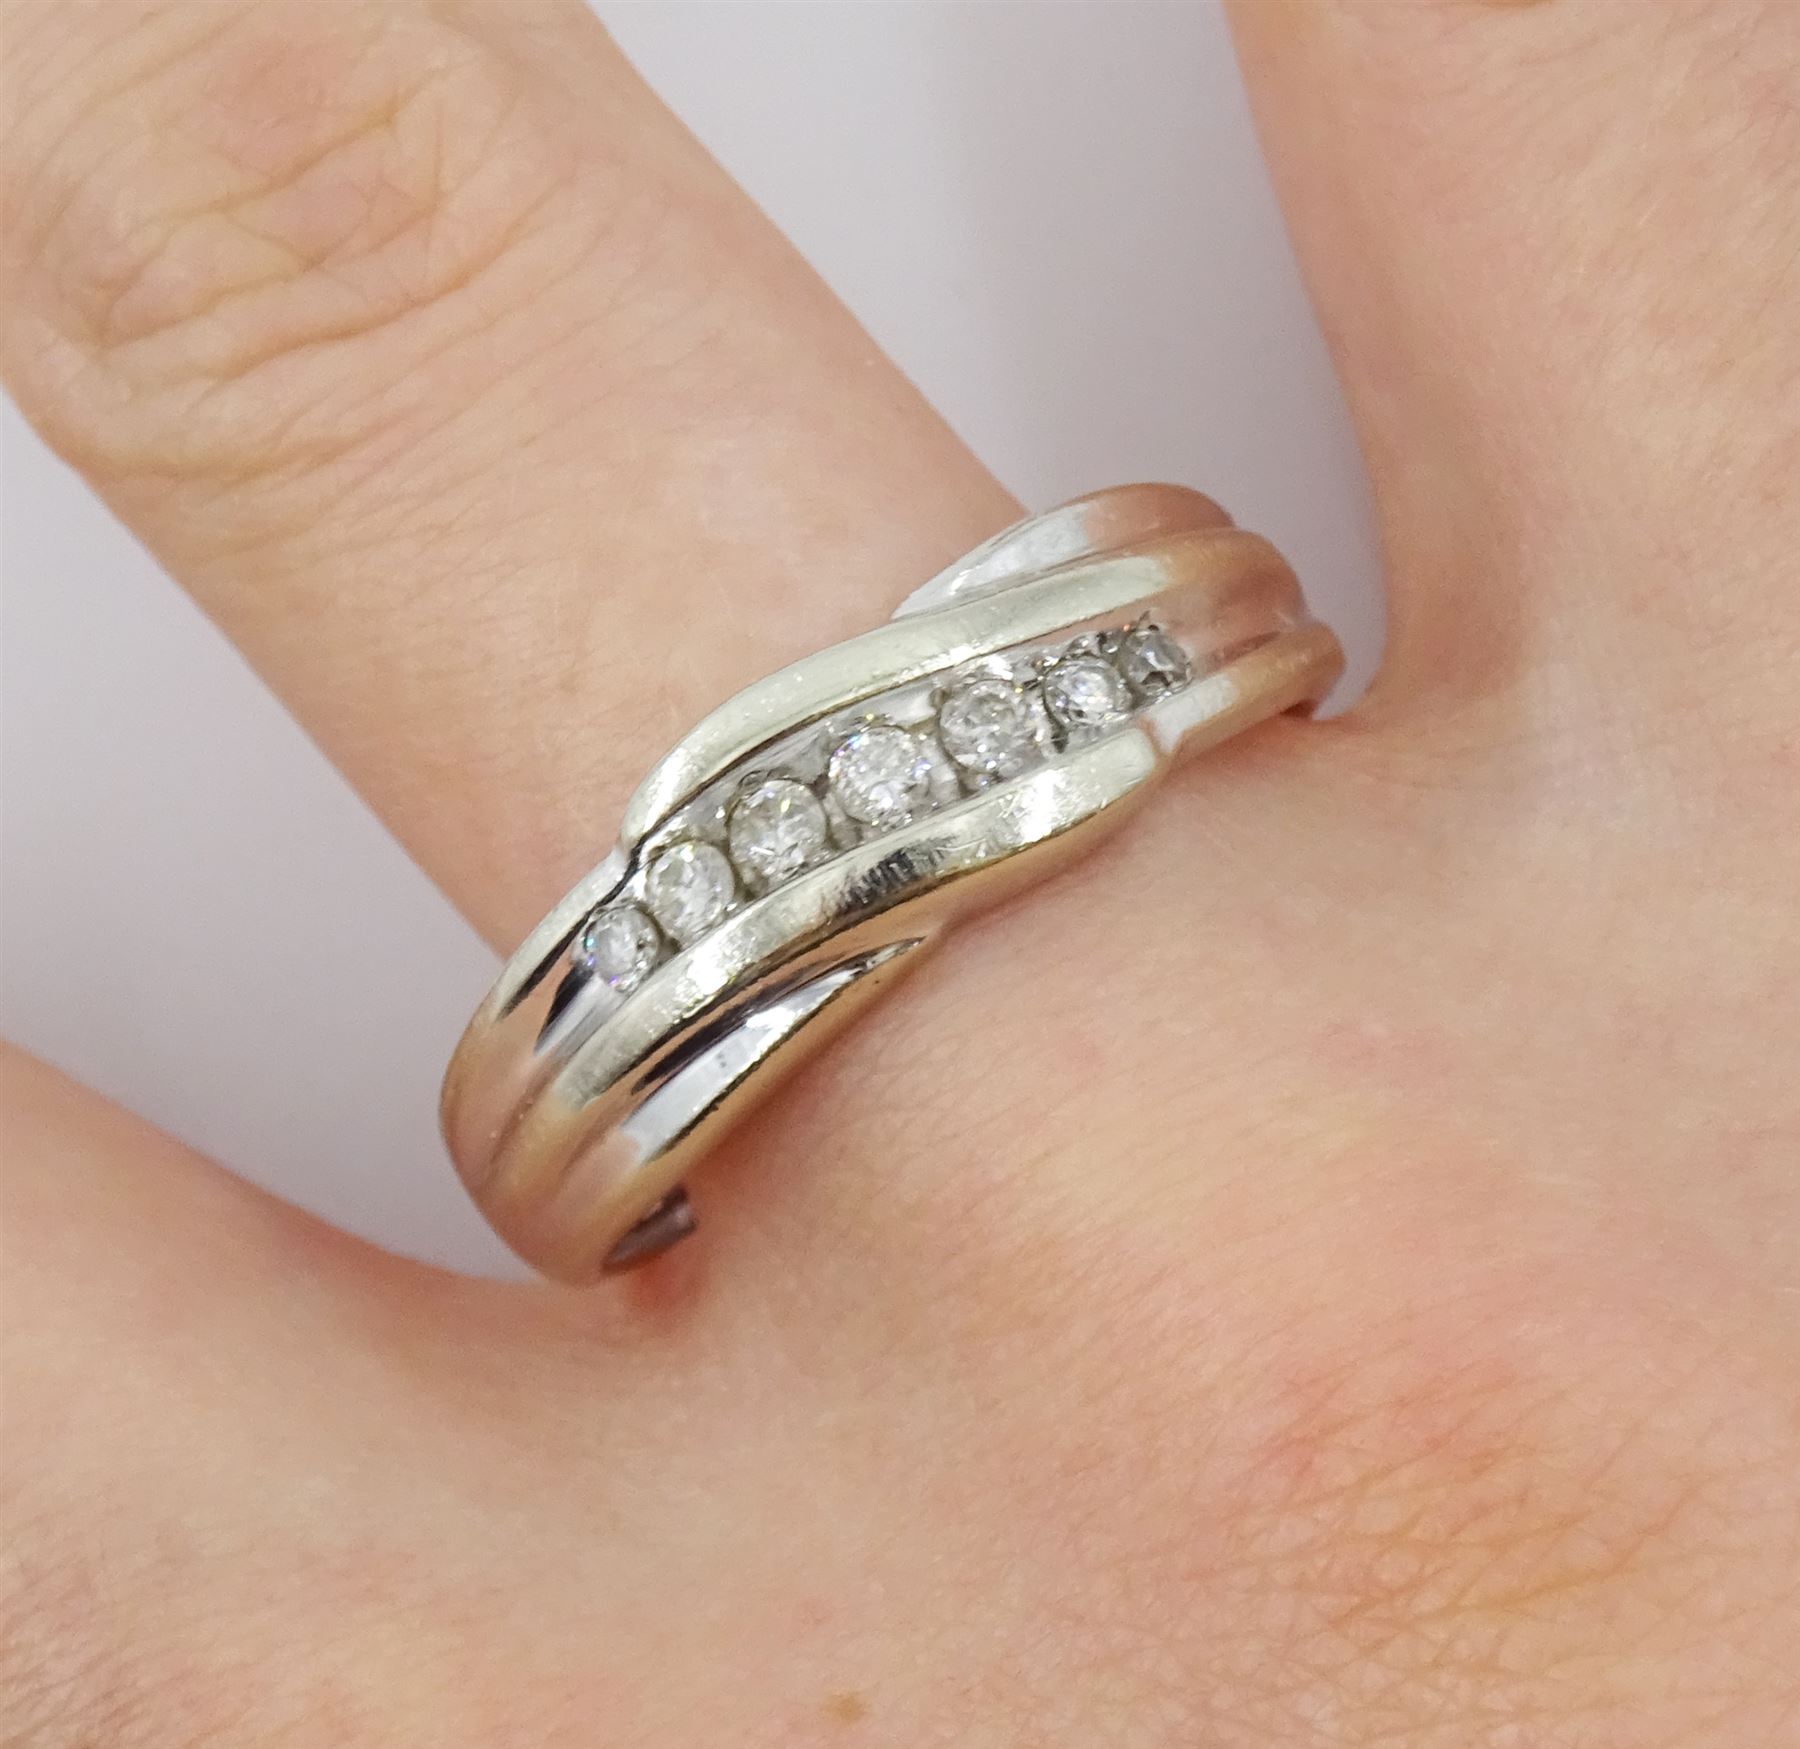 White gold graduating eight stone diamond ring - Image 2 of 4